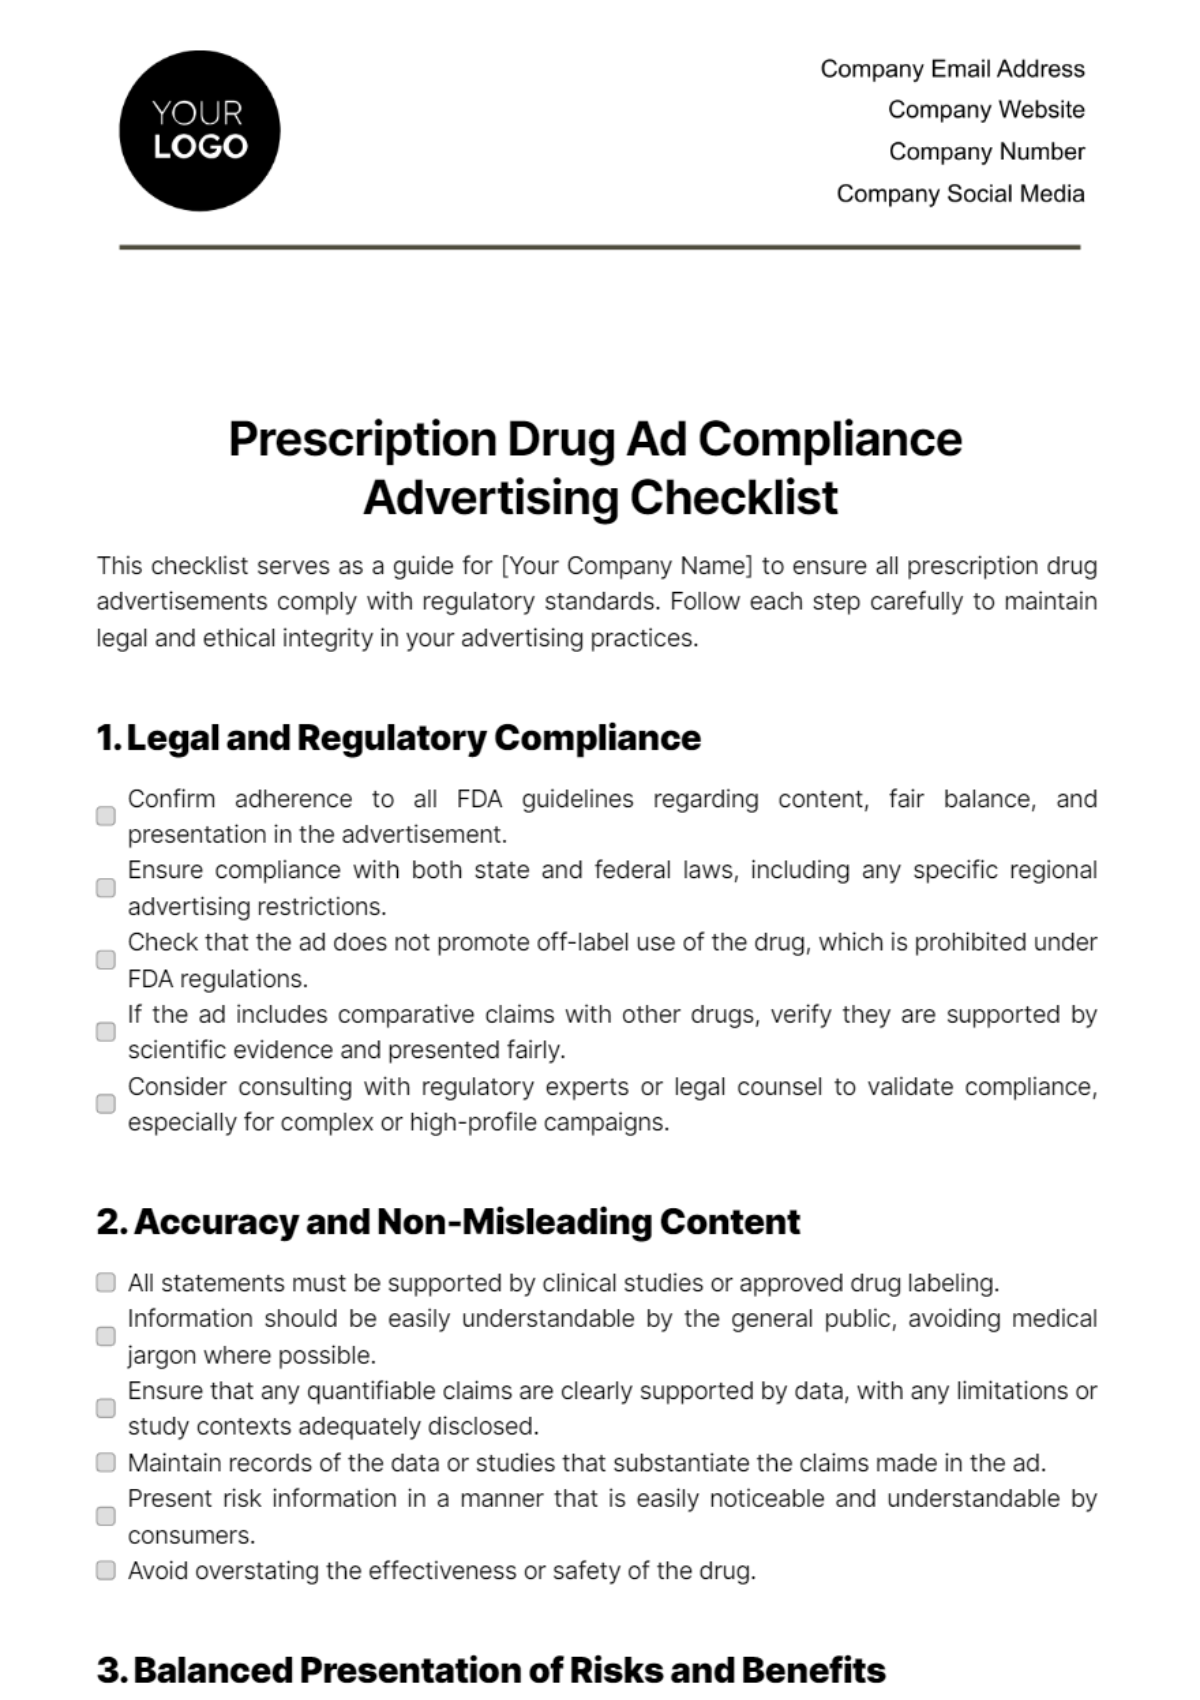 Prescription Drug Ad Compliance Advertising Checklist Template